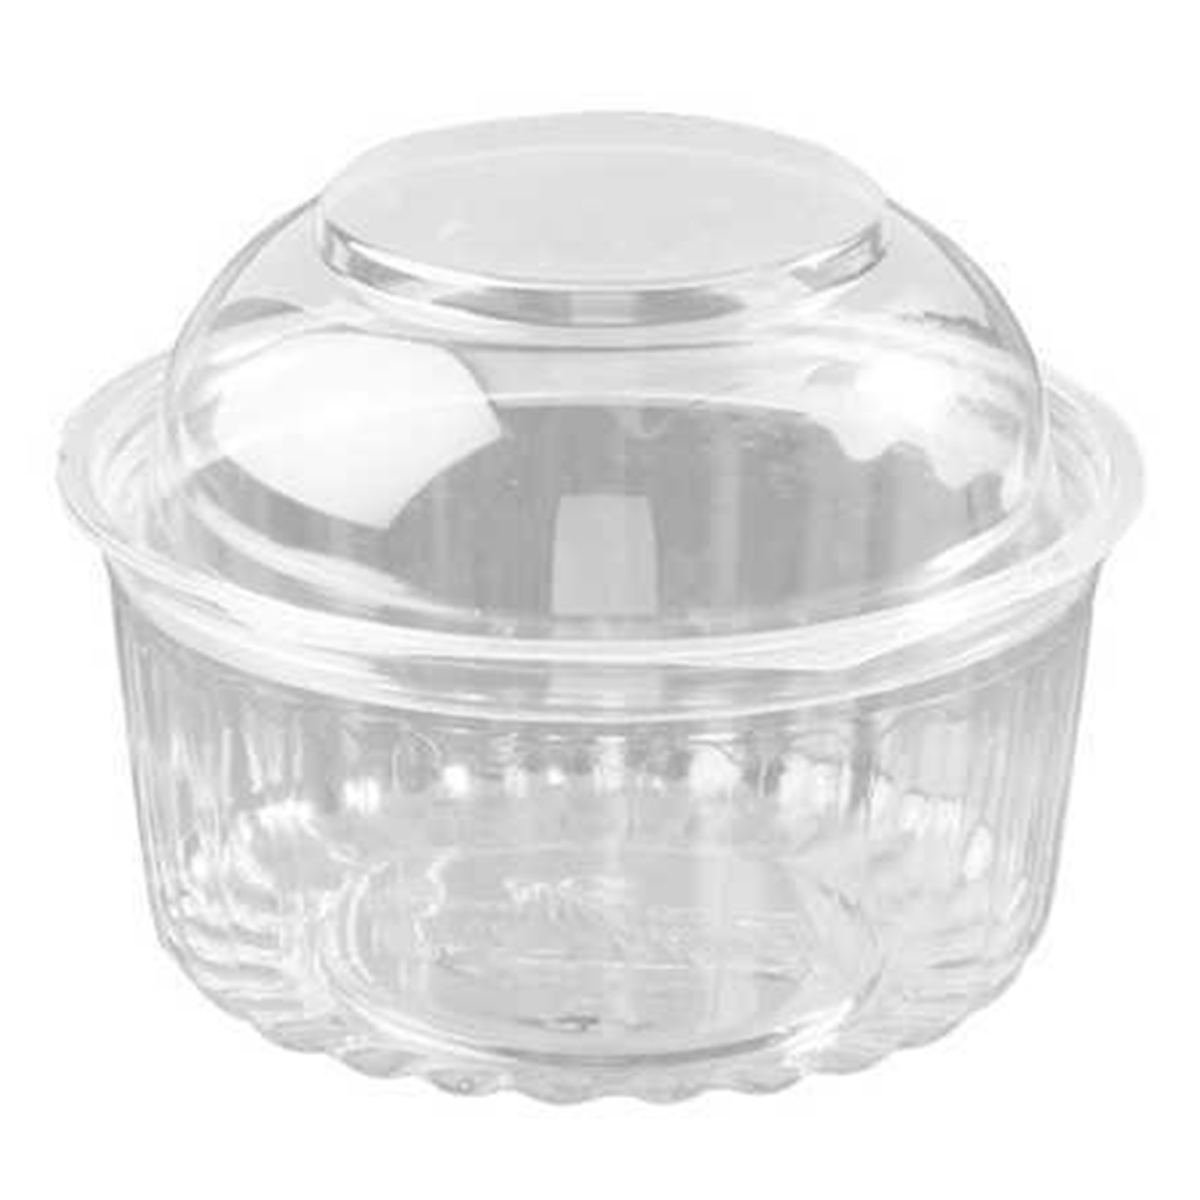 Clear Plastic Dome Lid Fits 10 1/4Dia Bowls